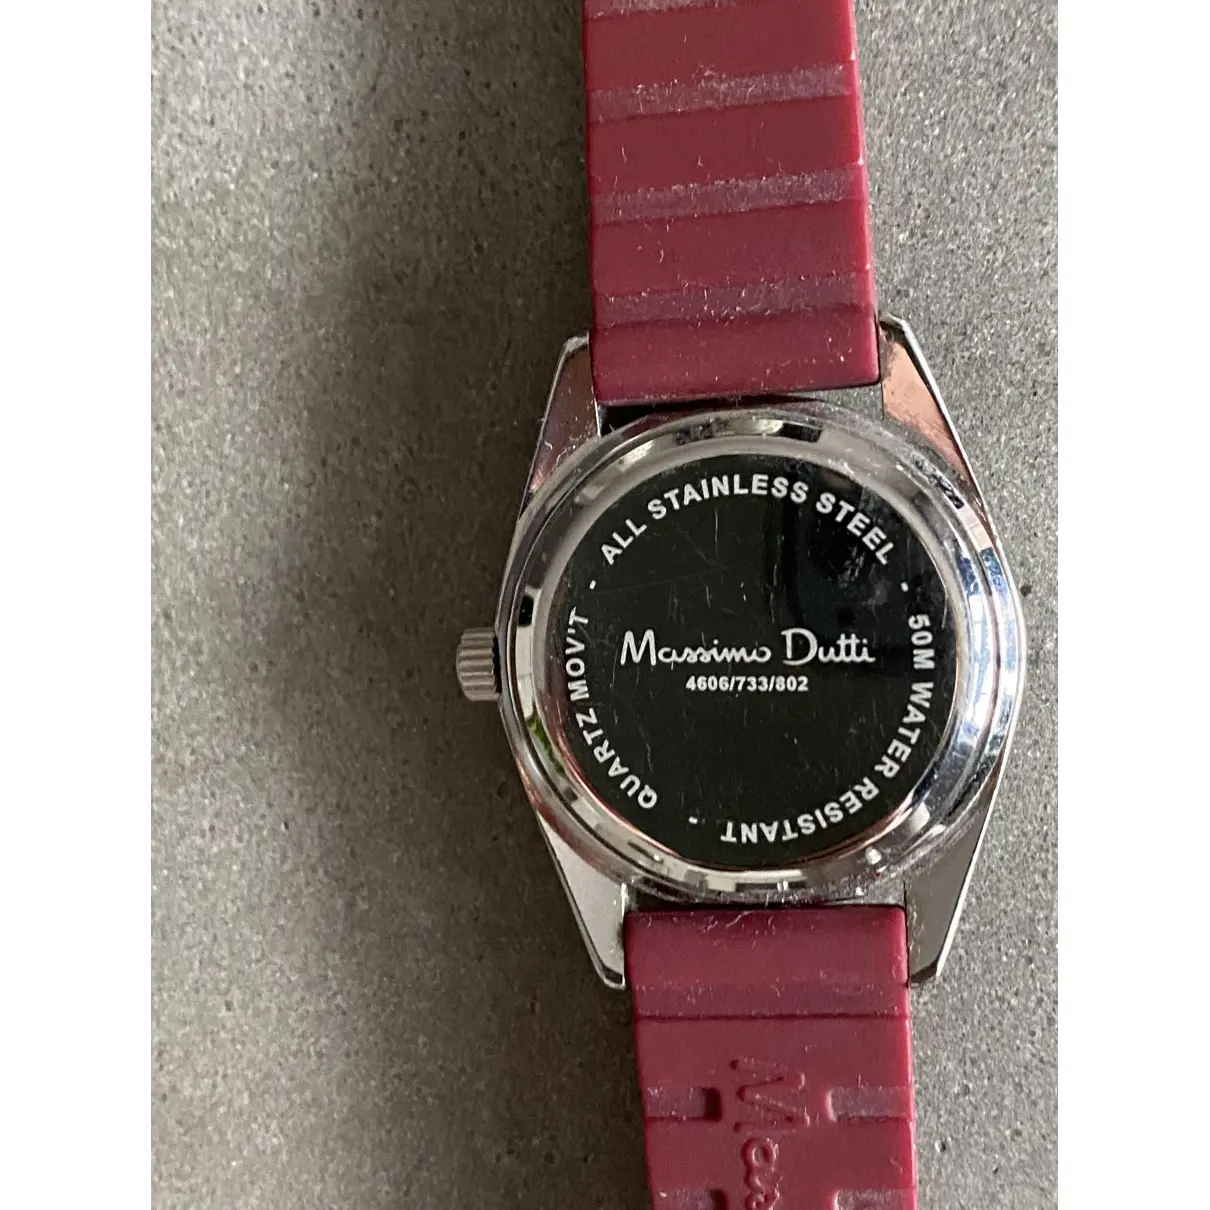 Buy Massimo Dutti Watch online